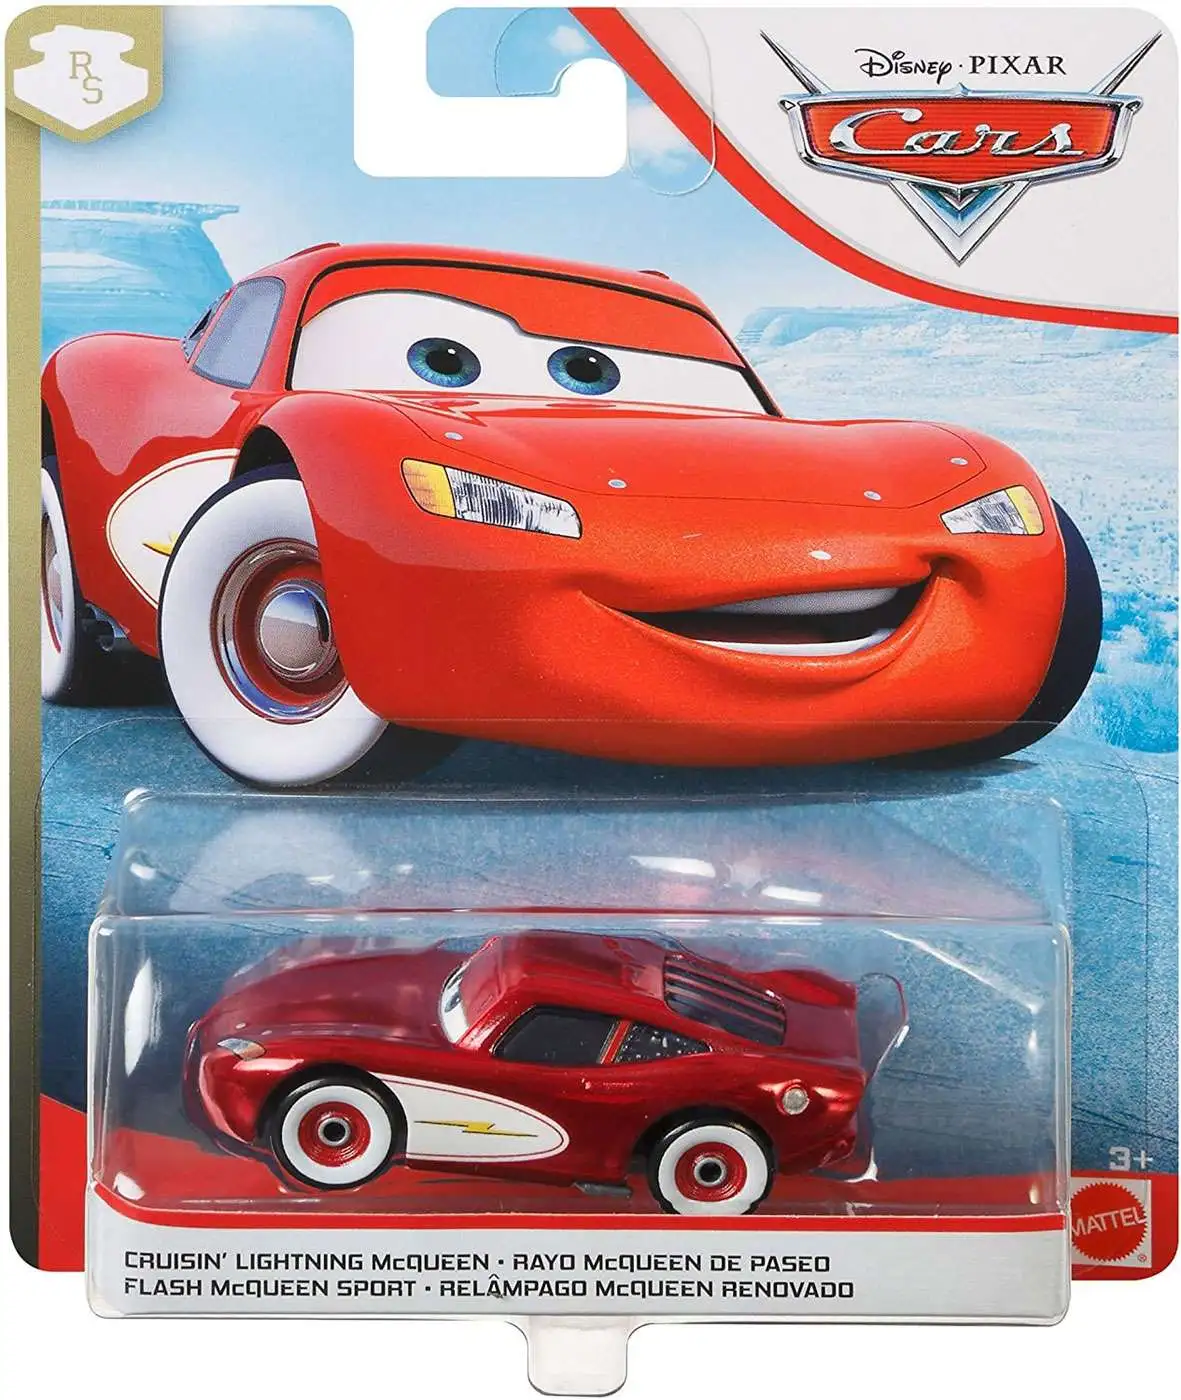 Disney Pixar Cars Cars 3 Radiator Springs Cruisin Lightining